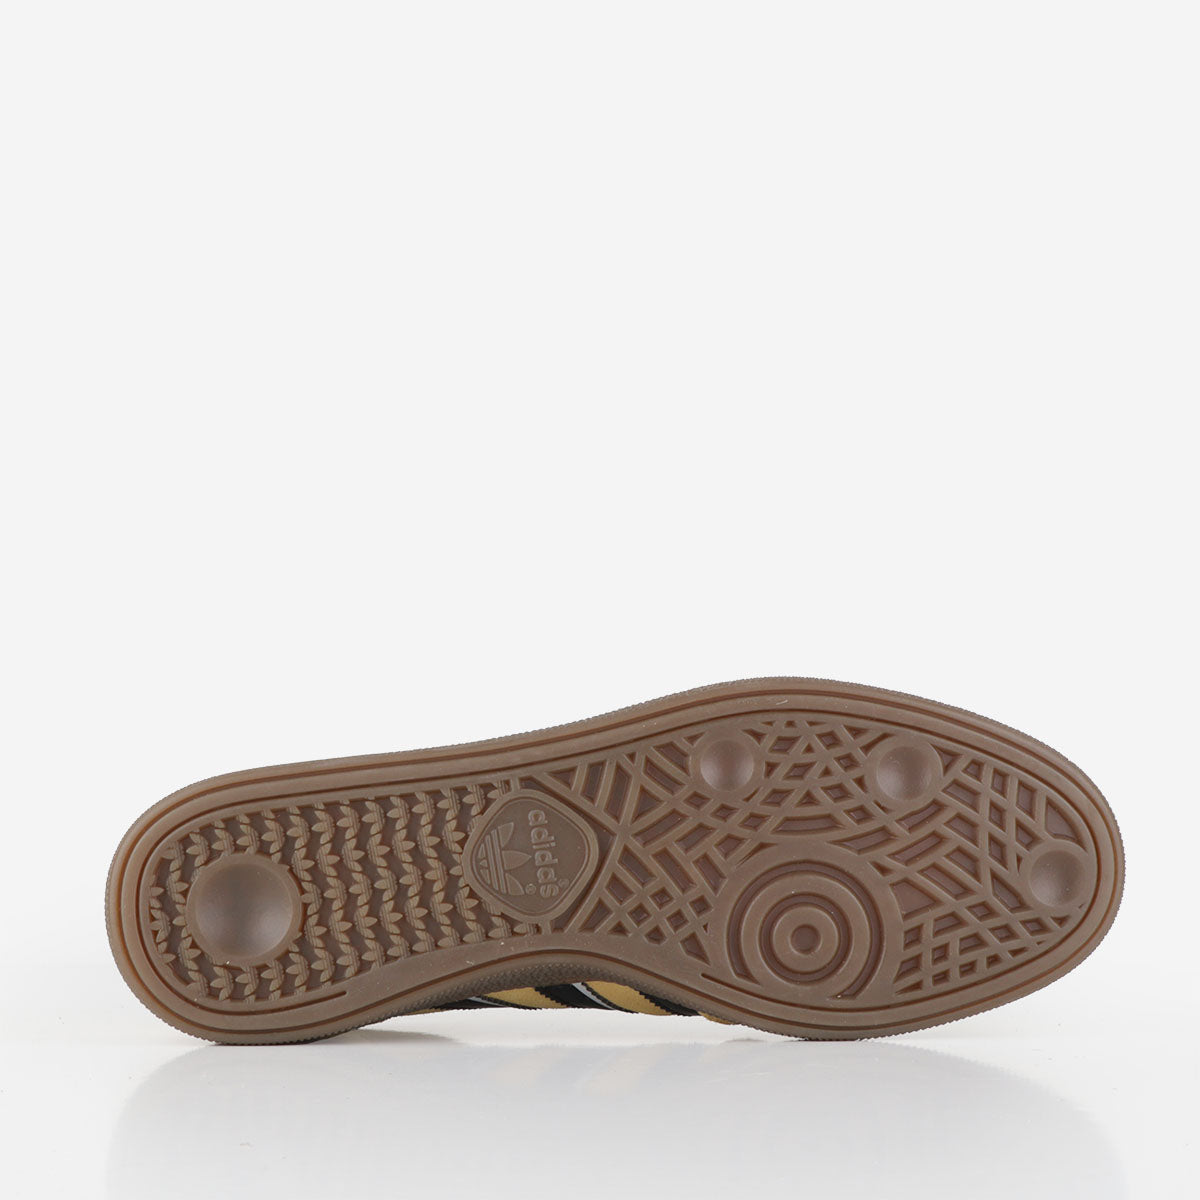 Adidas Originals Handball Spezial Shoes, Oat Core Black Crystal White, Detail Shot 4